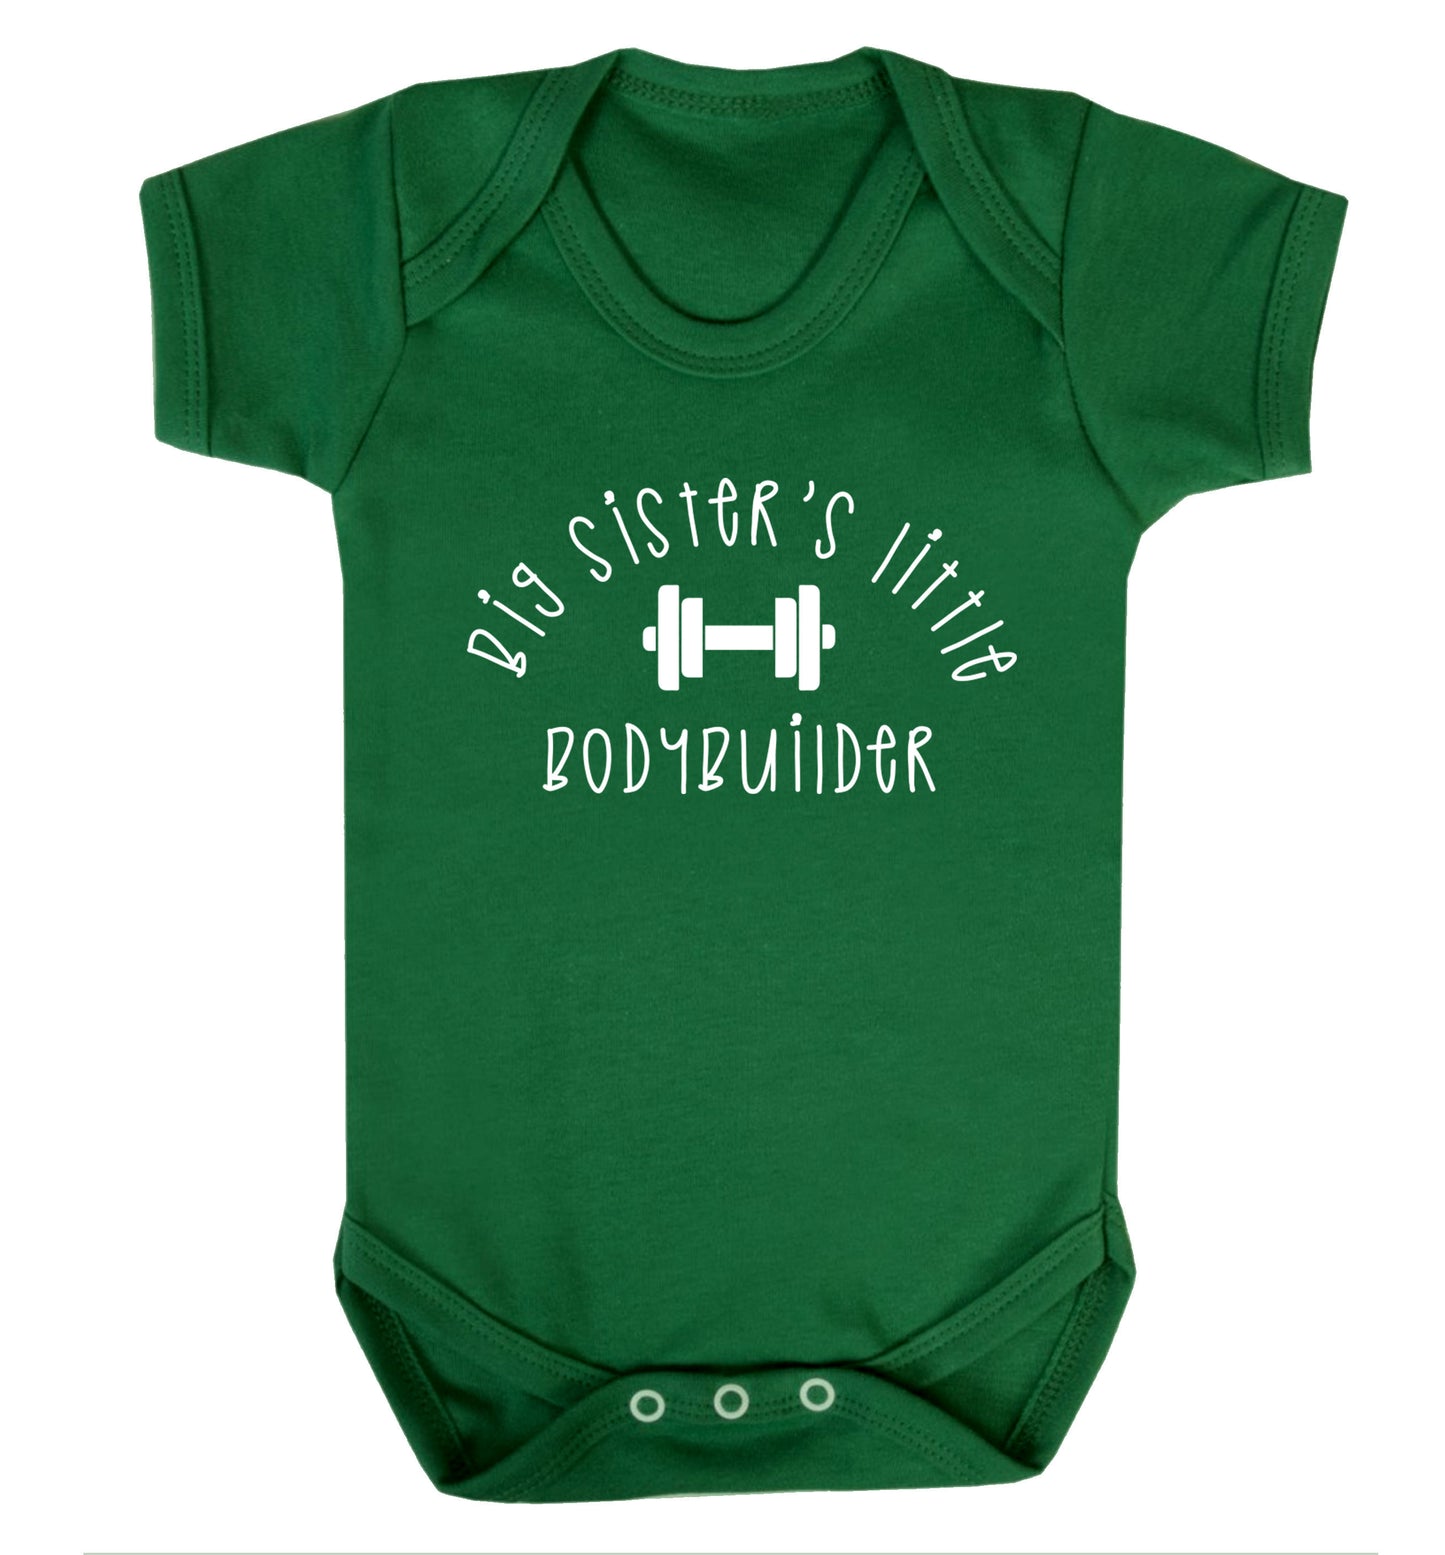 Big sister's little bodybuilder Baby Vest green 18-24 months